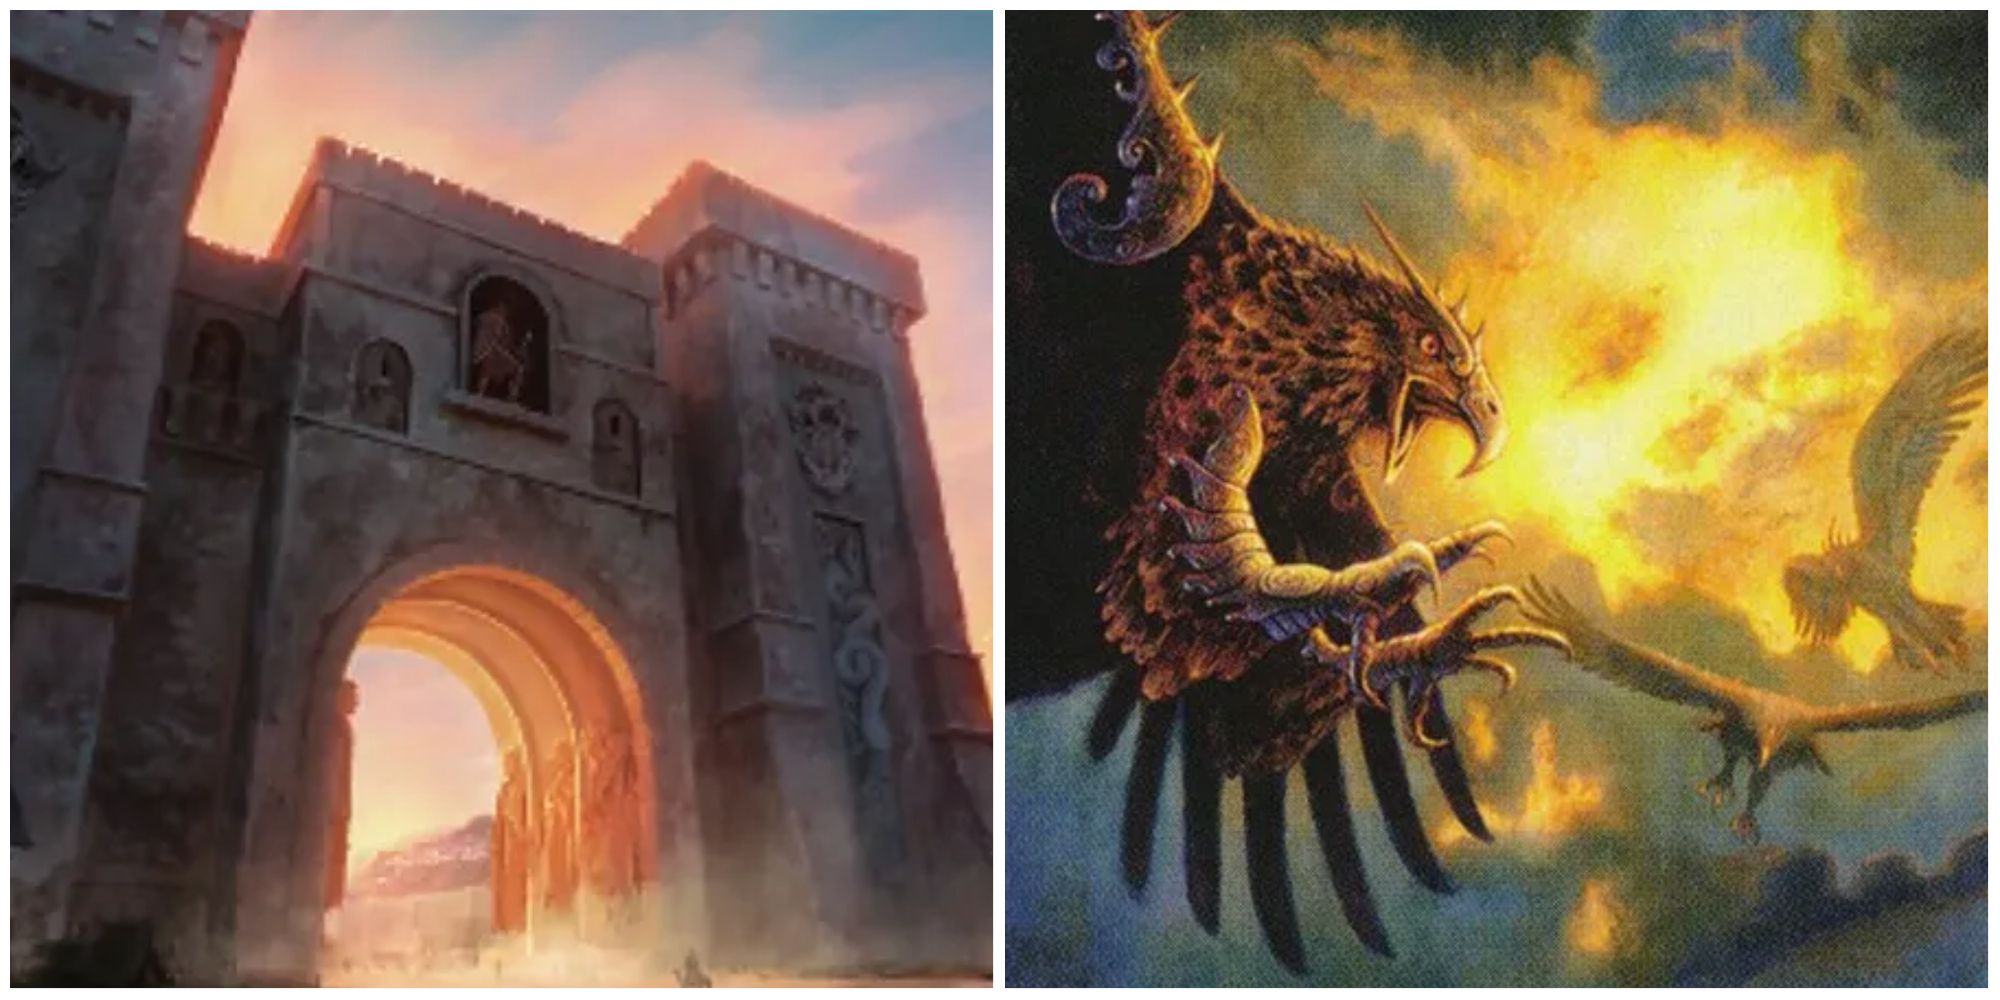 Basilisk Gate and Squadron Hawk card artworks